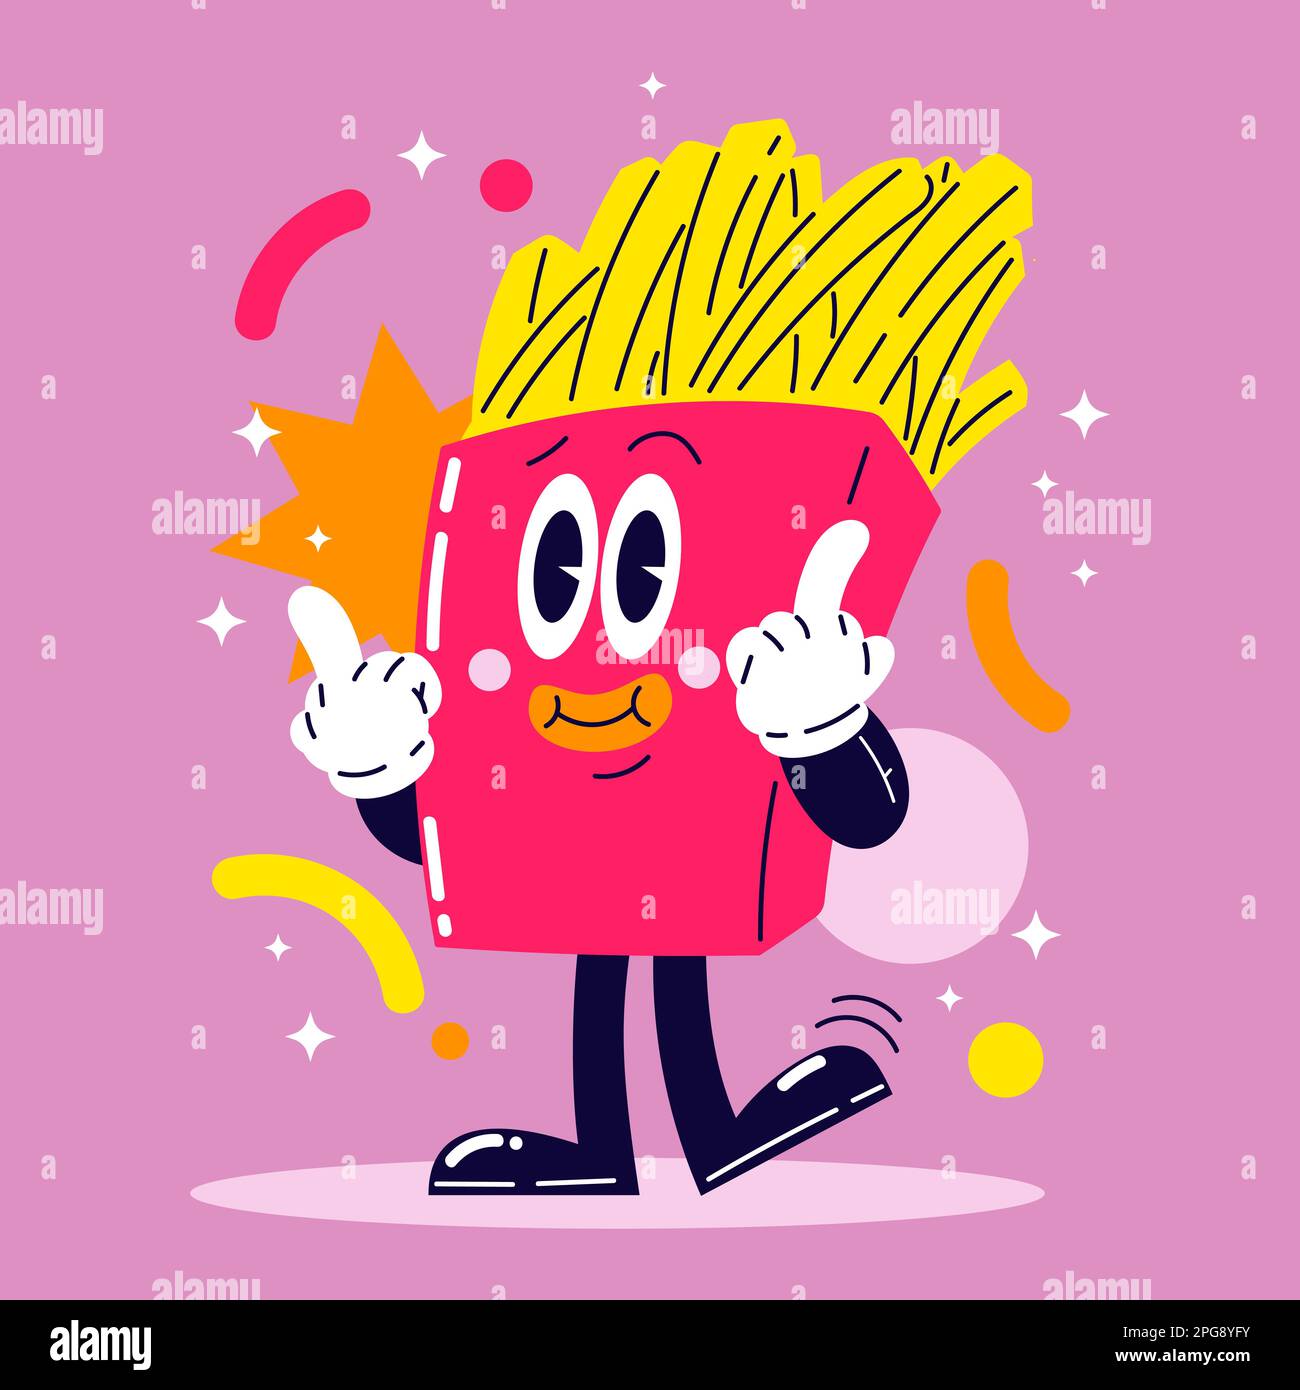 Fast food Mascot, Cartoon Retro art, Vintage Illustration Character Stock Vector